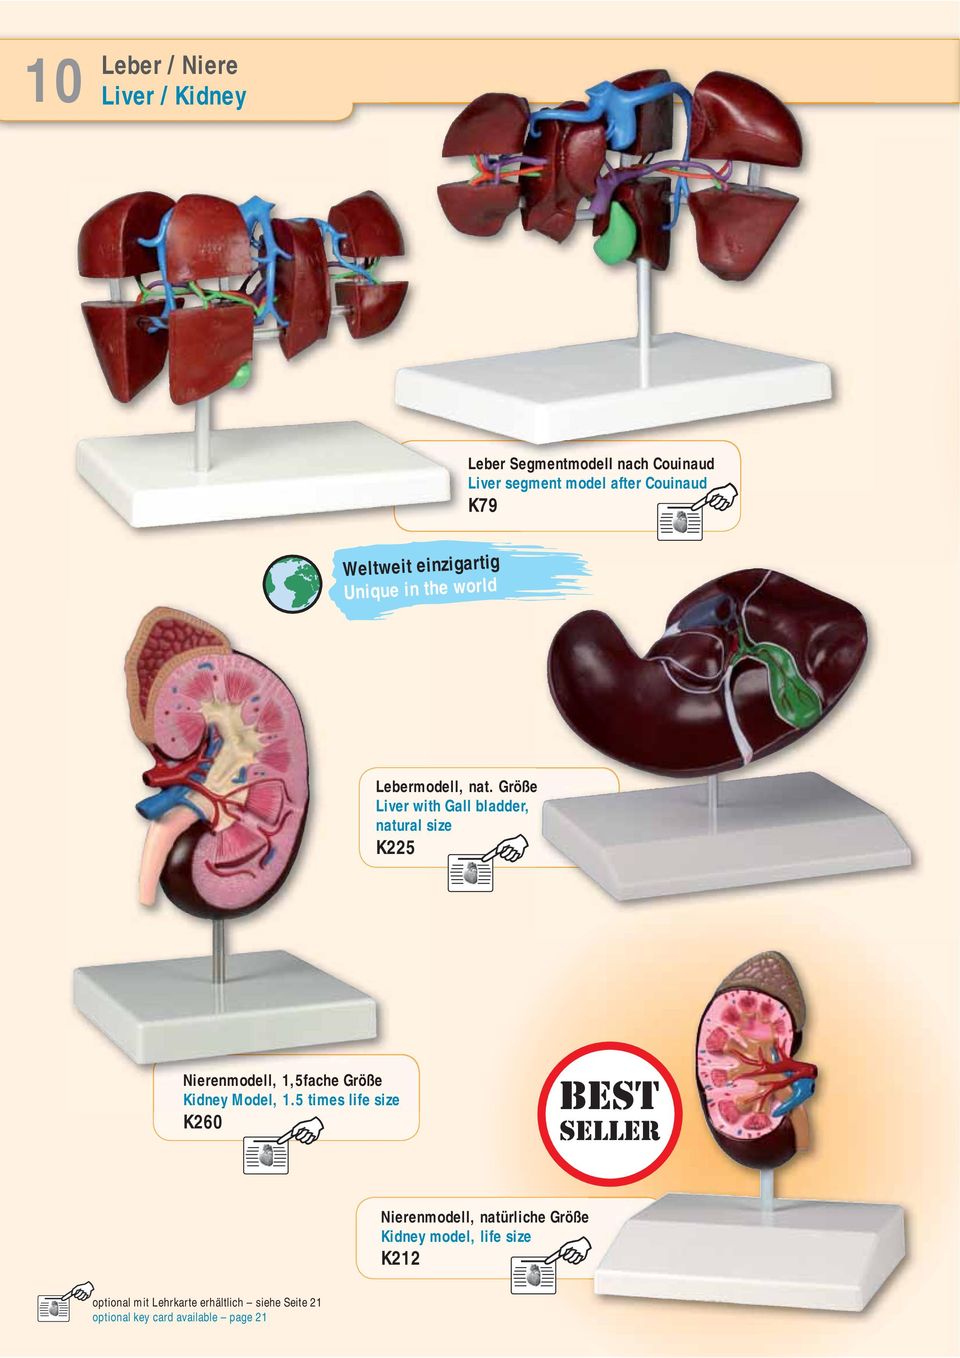 Größe Liver with Gall bladder, natural size K225 Nierenmodell, 1,5fache Größe Kidney Model, 1.